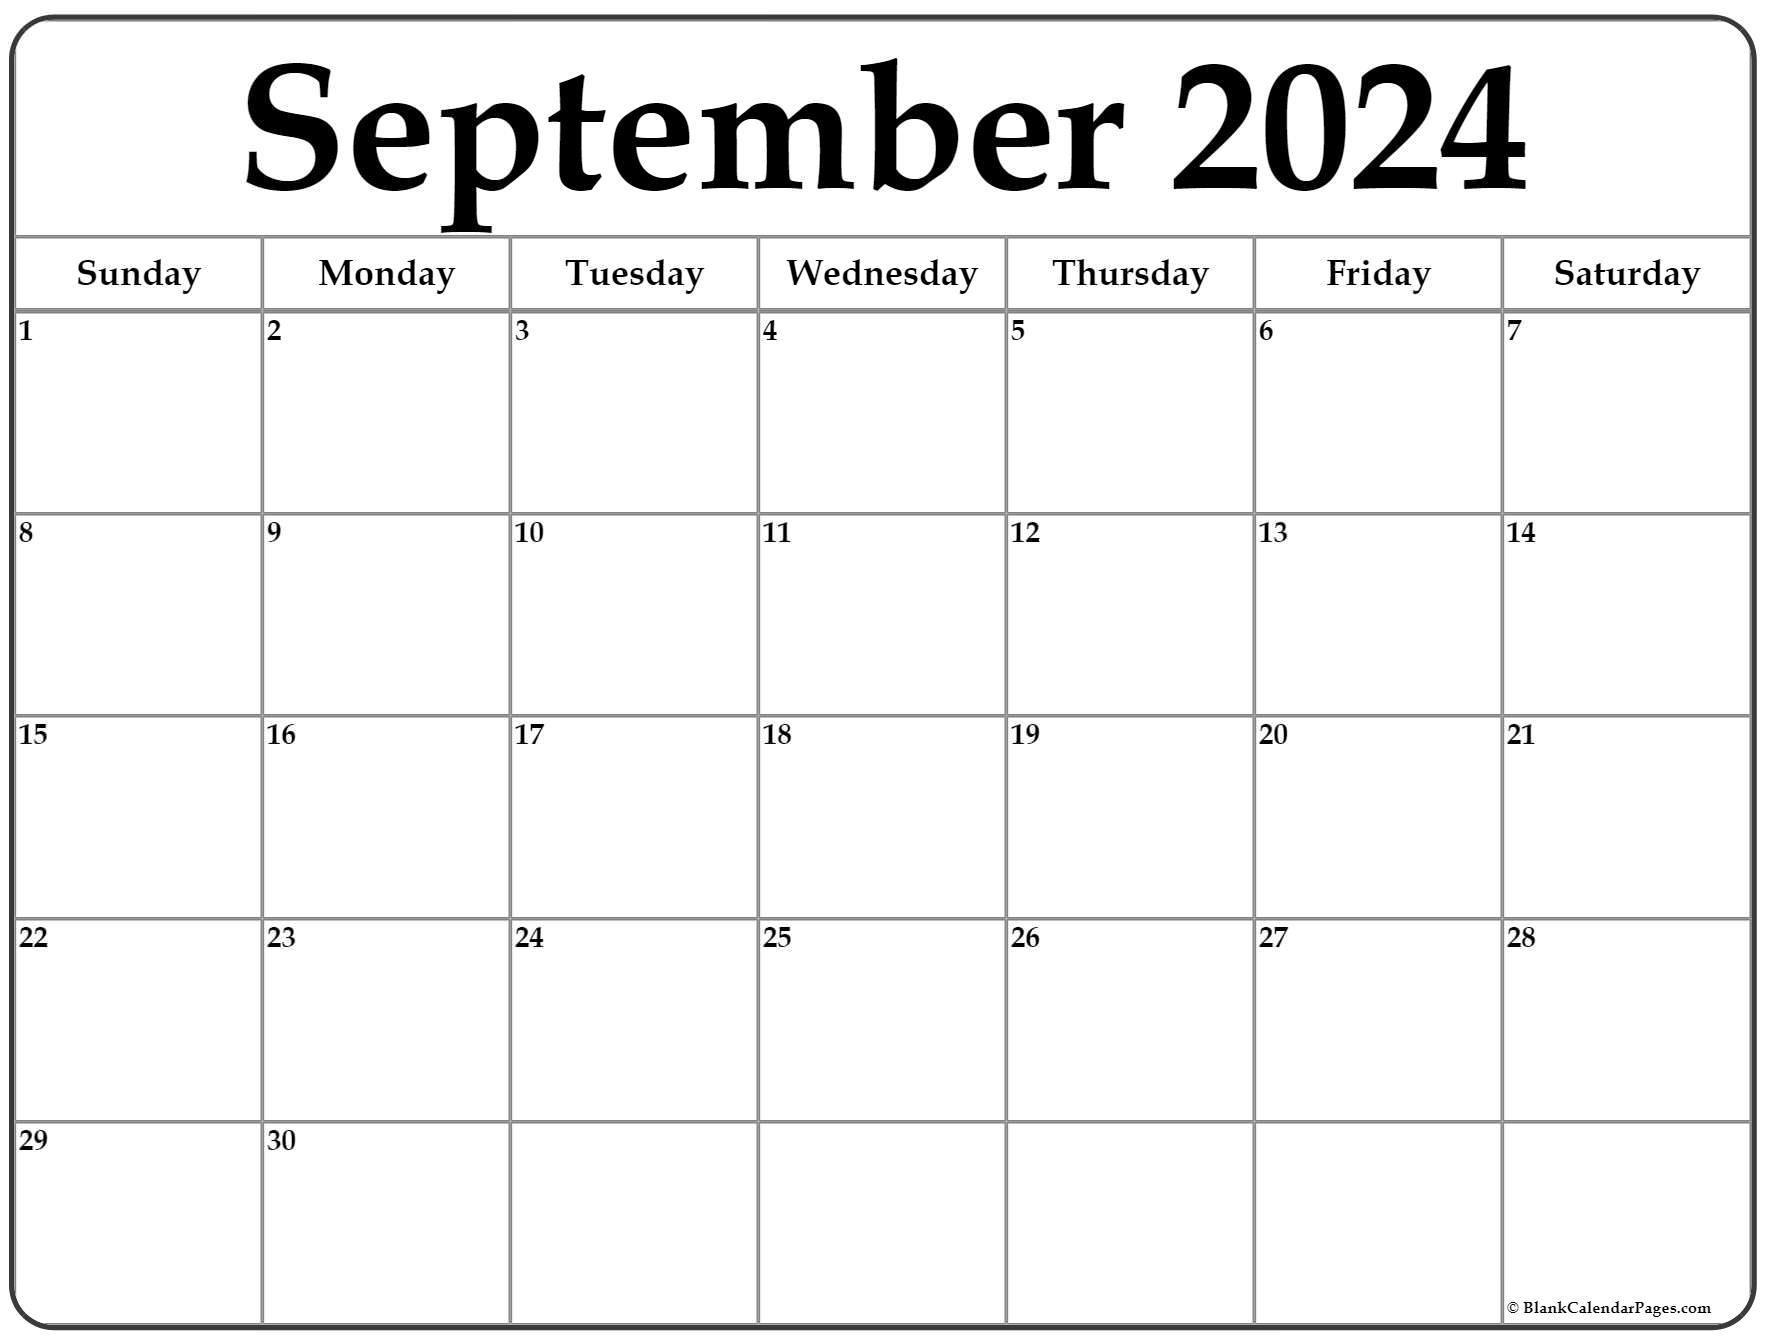 Sep 2022 Calendar Printable September 2022 Calendar | Free Printable Calendar Templates